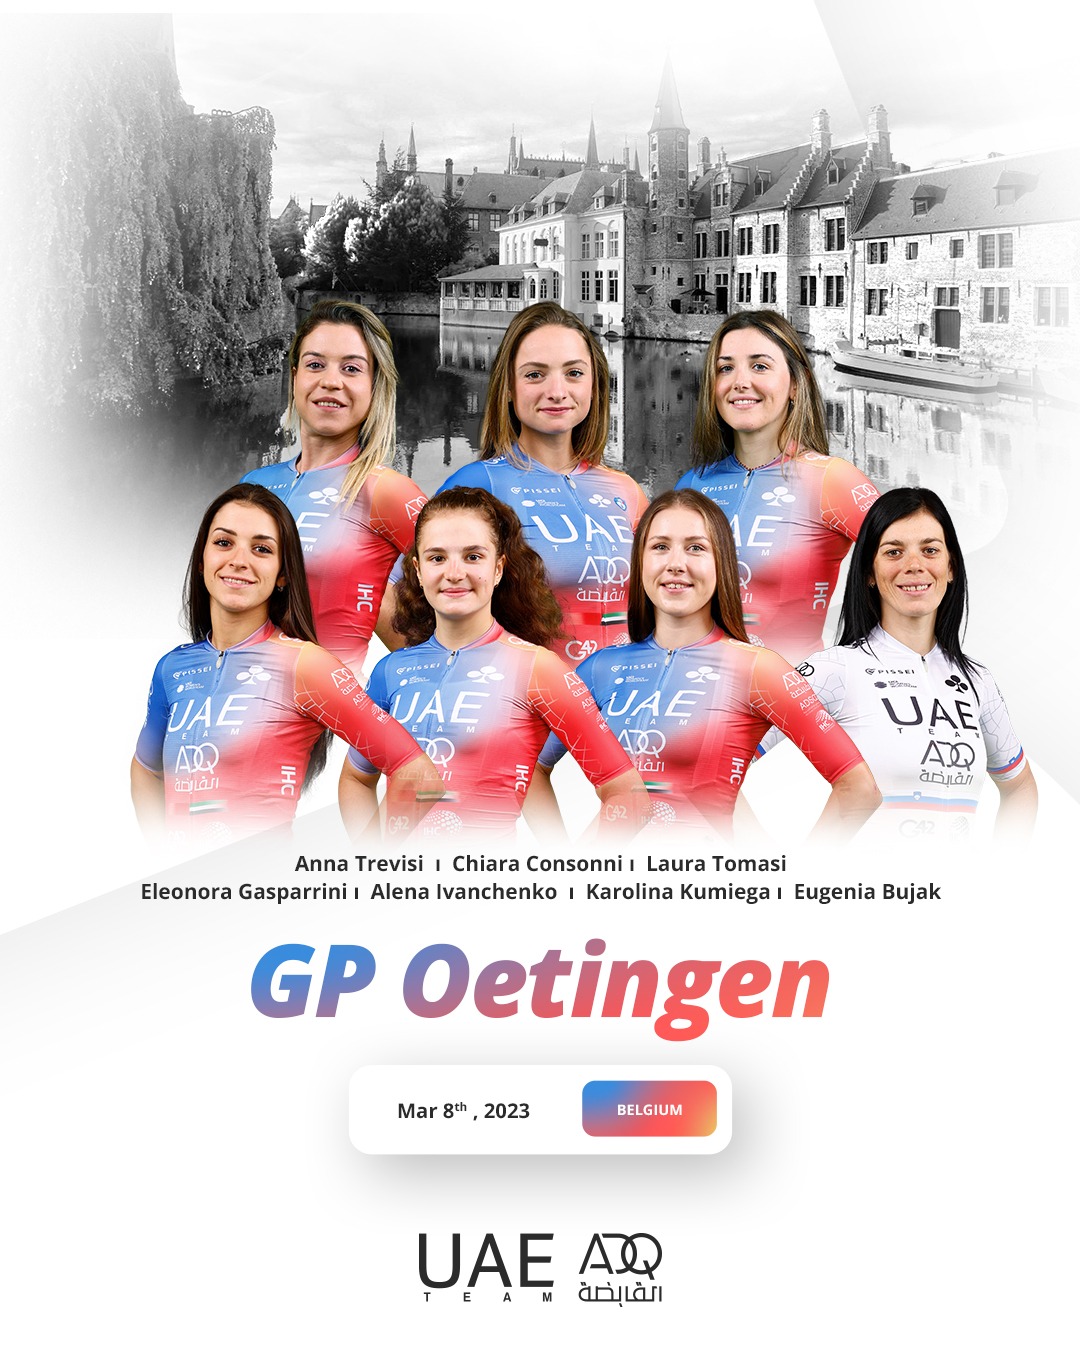 Tomorrow in Oetingen, Saturday in Drenthe